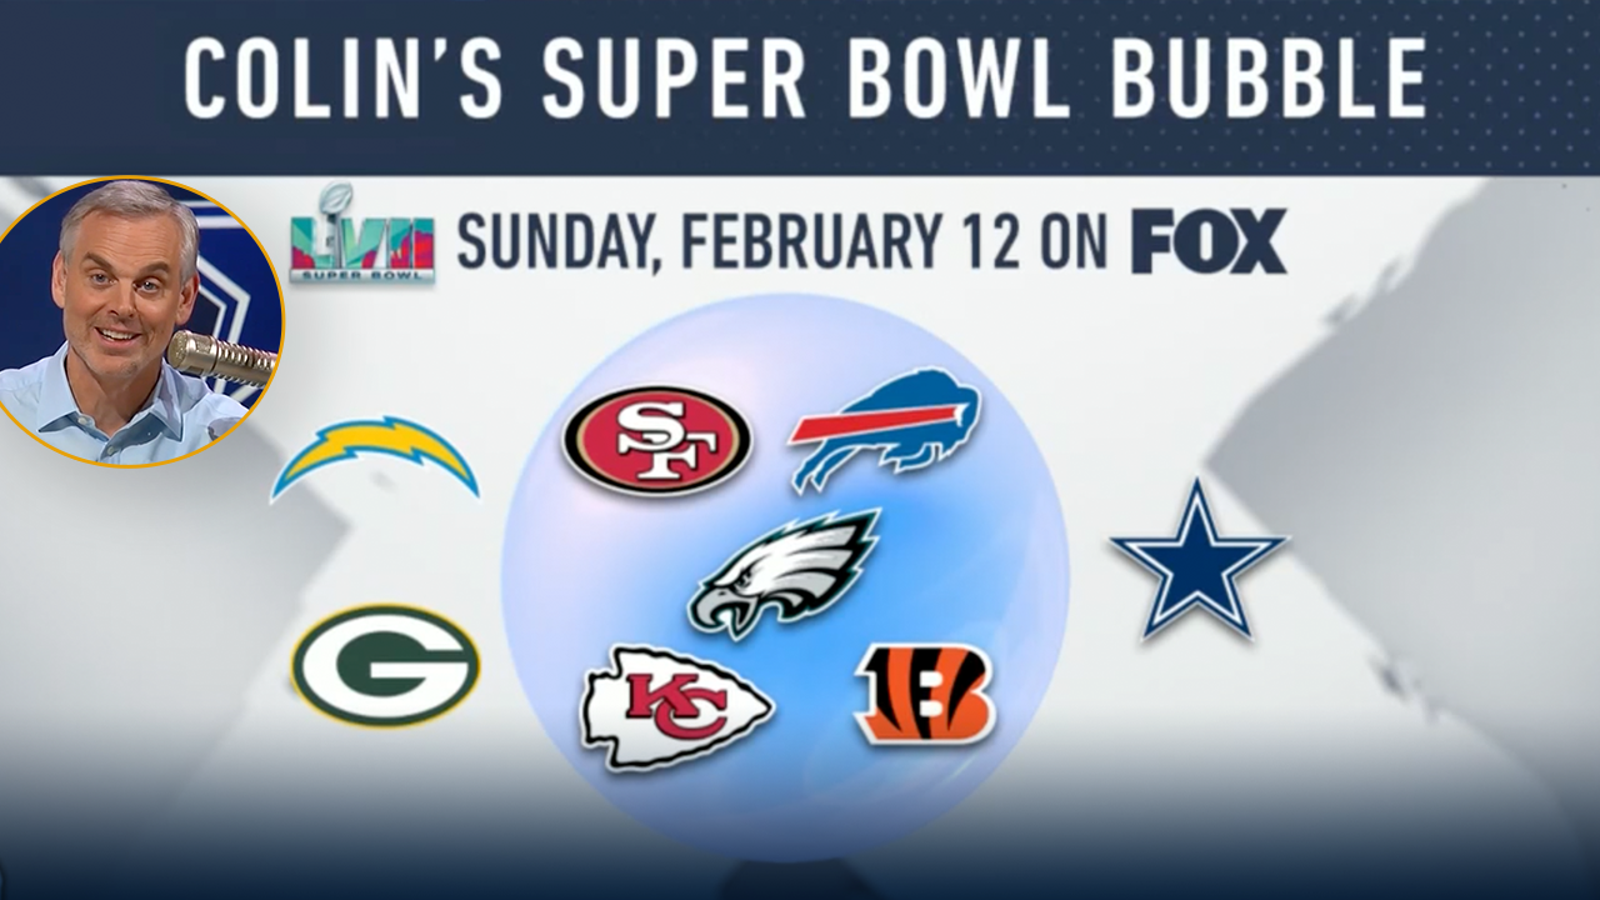 Where do the Cowboys fall in Colin's Super Bowl Bubble?